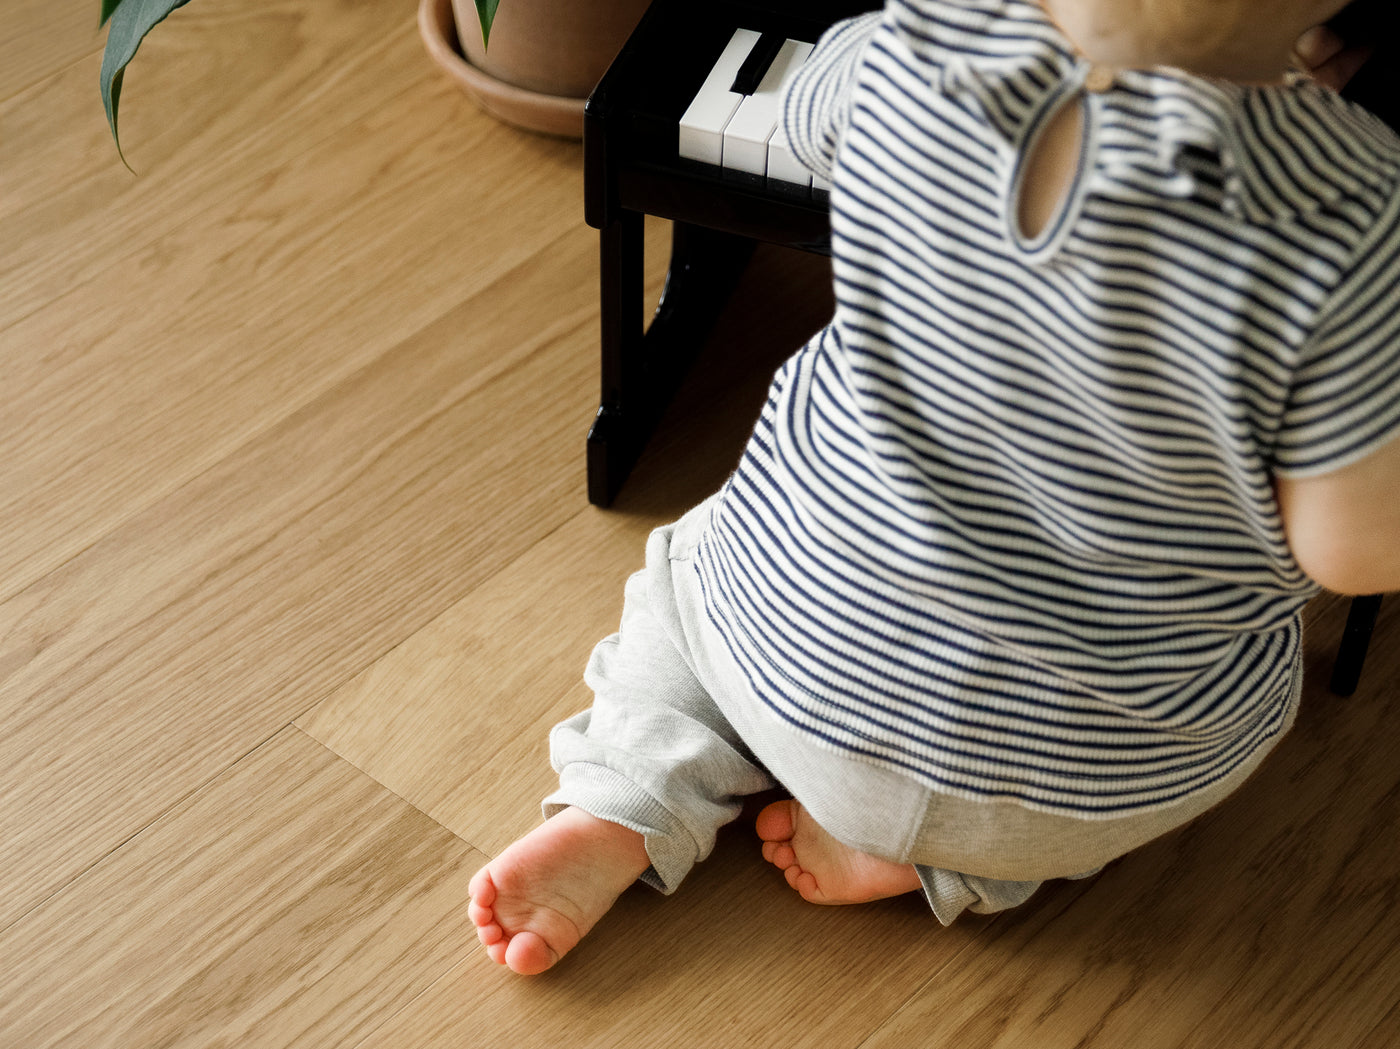 Baby on waterproof hardwood flooring in a striped shirt